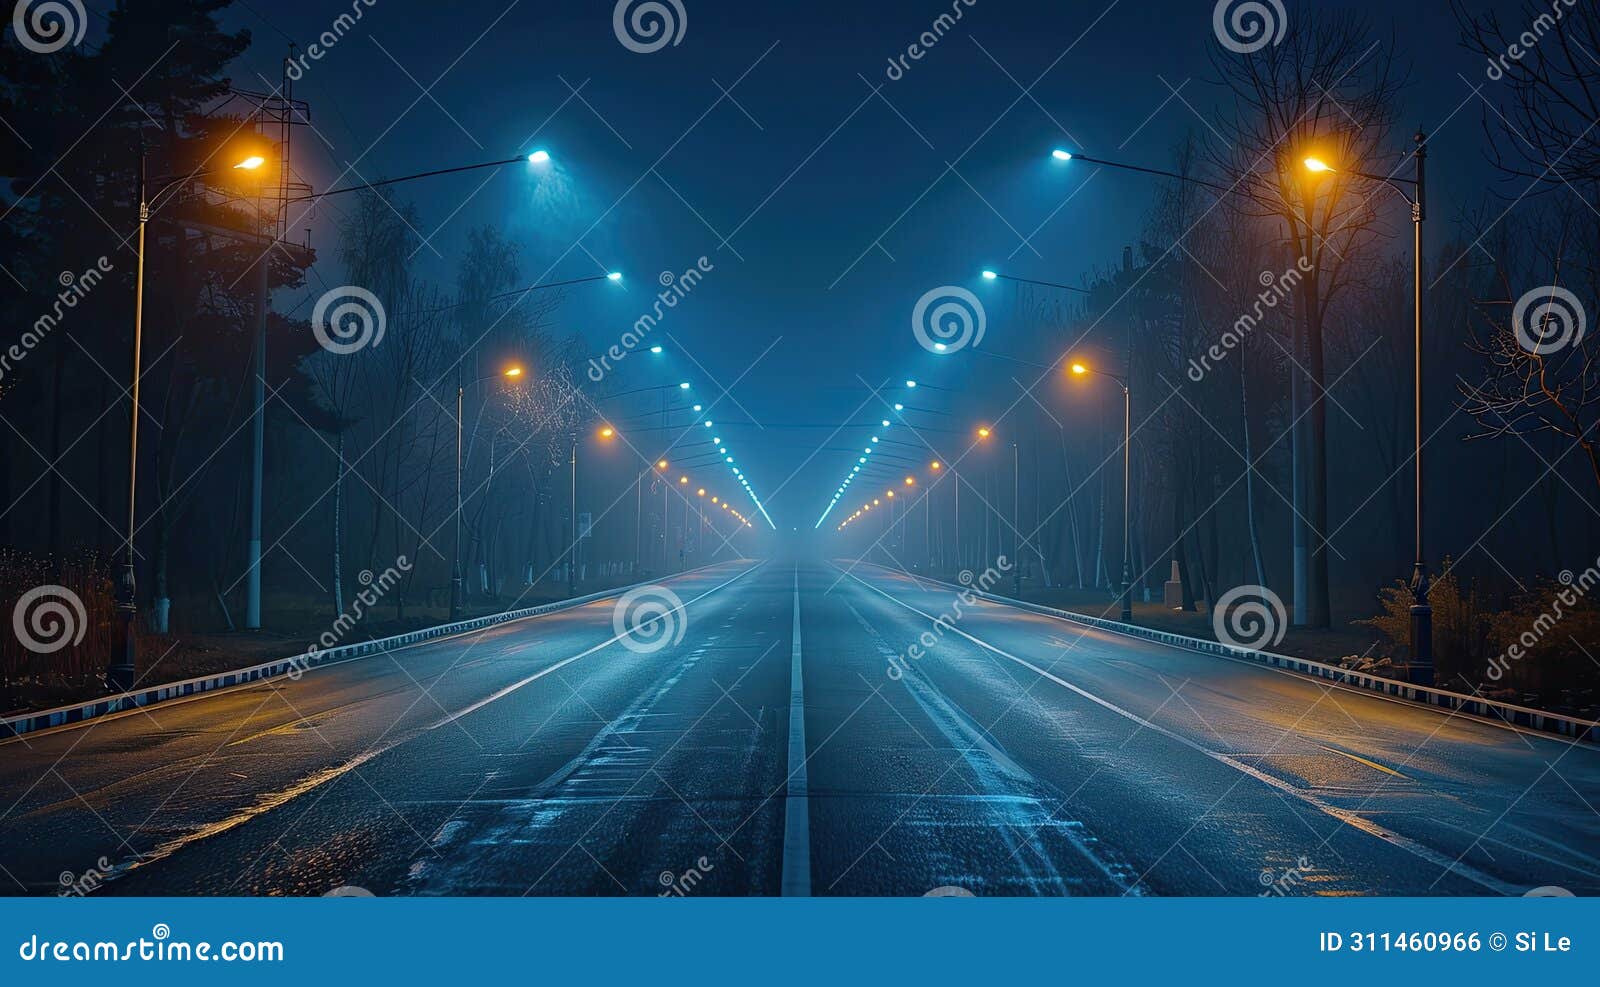 nighttime drive: illuminated thoroughfare on a wide road